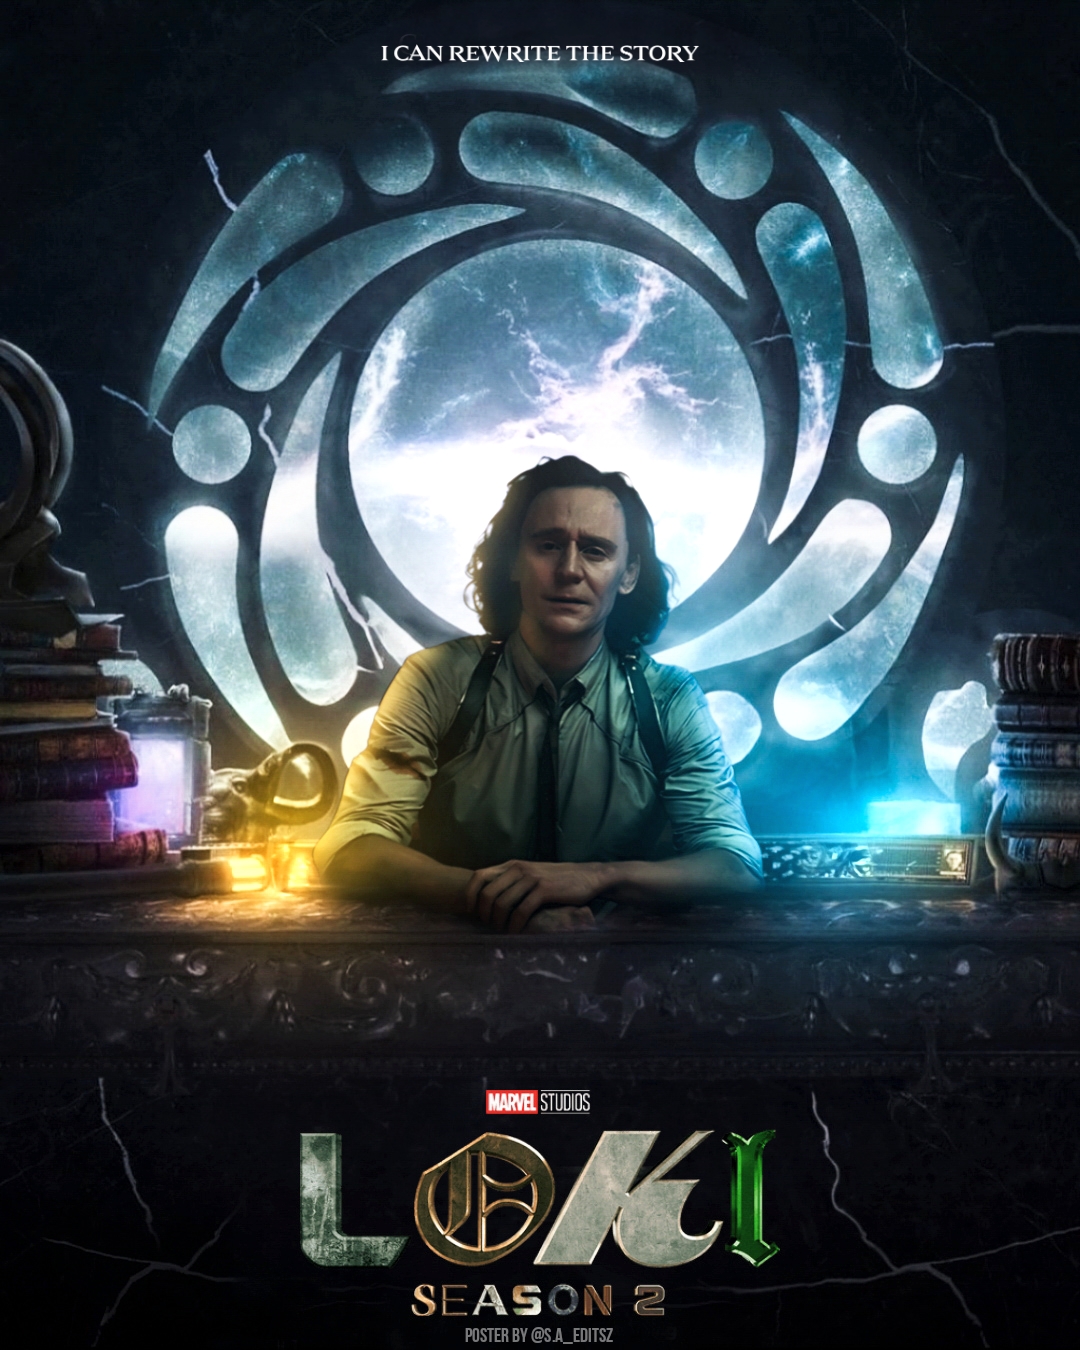 Loki Season 2 poster